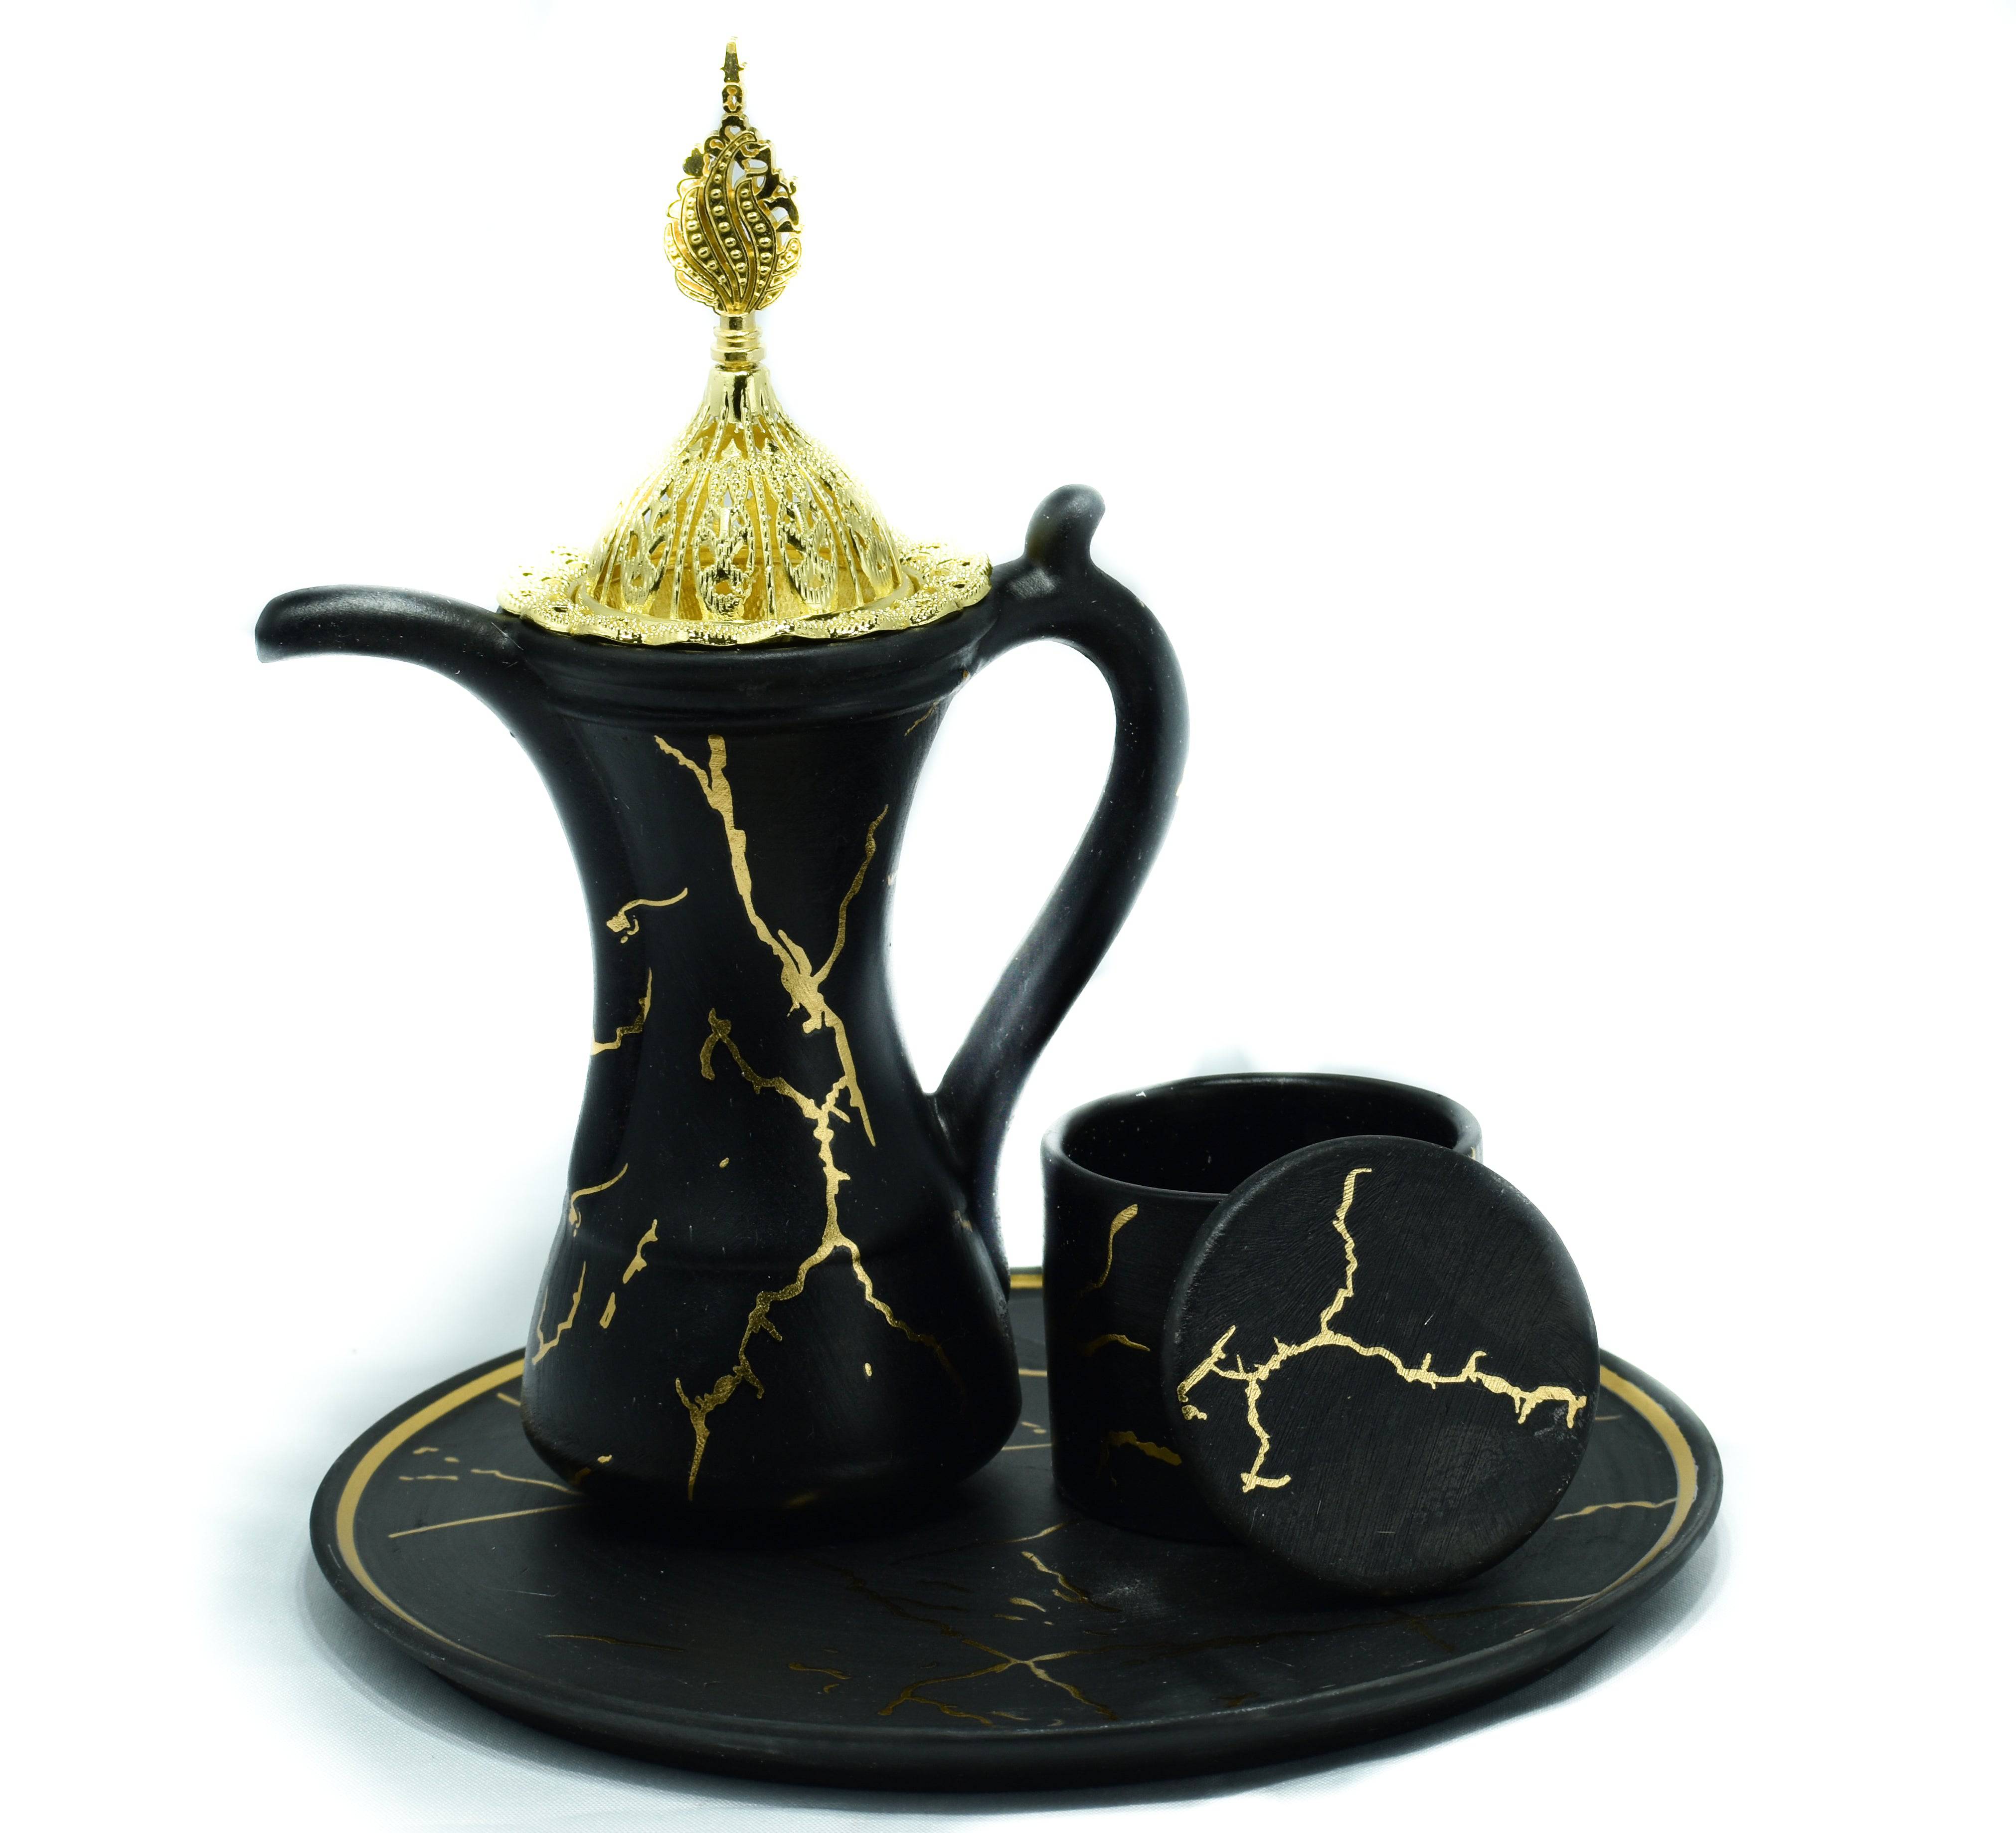 Marble Design Royal Bakhoor Tea Set w/ Circular Tray - Black by Intense Oud - Intense oud